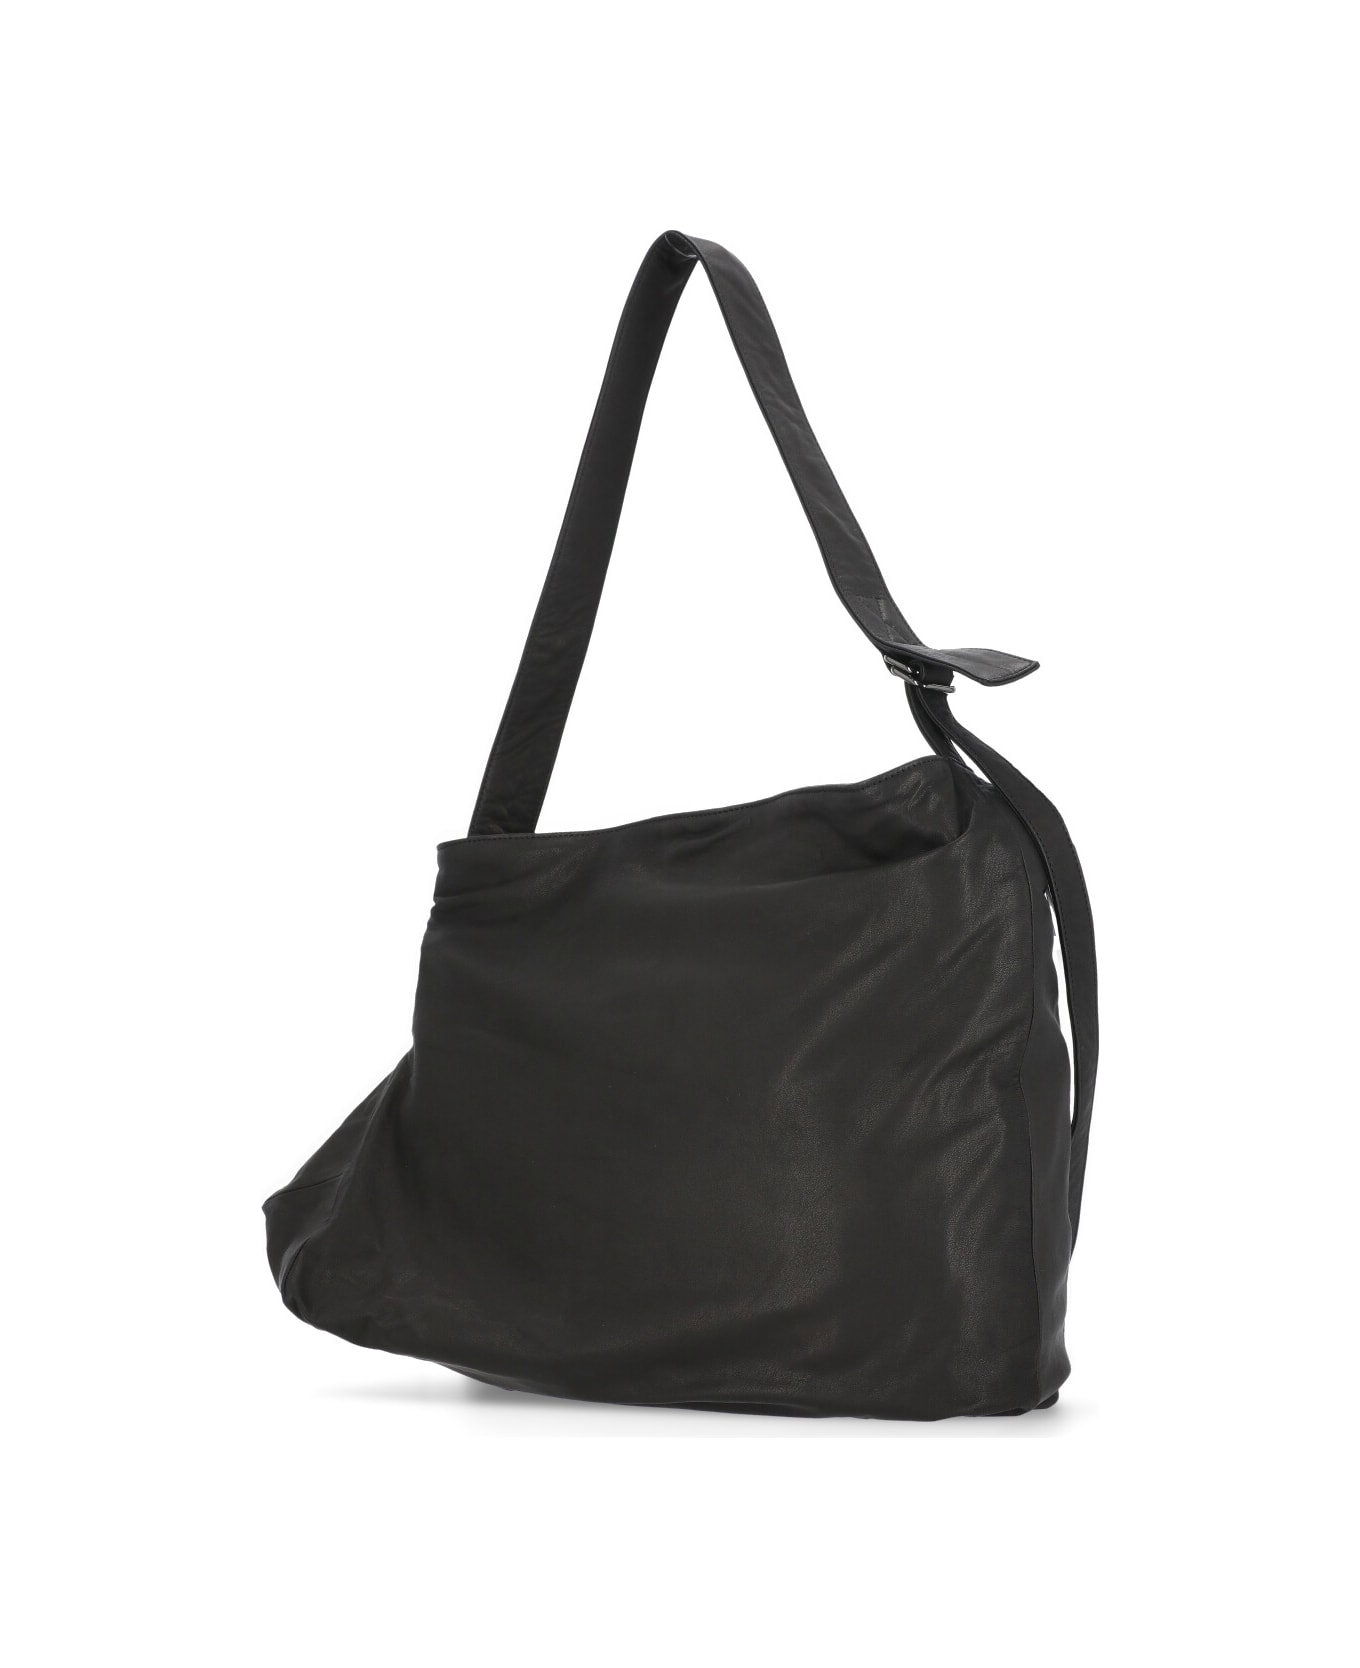 Discord Yohji Yamamoto Leather Shoulder Bag - Black